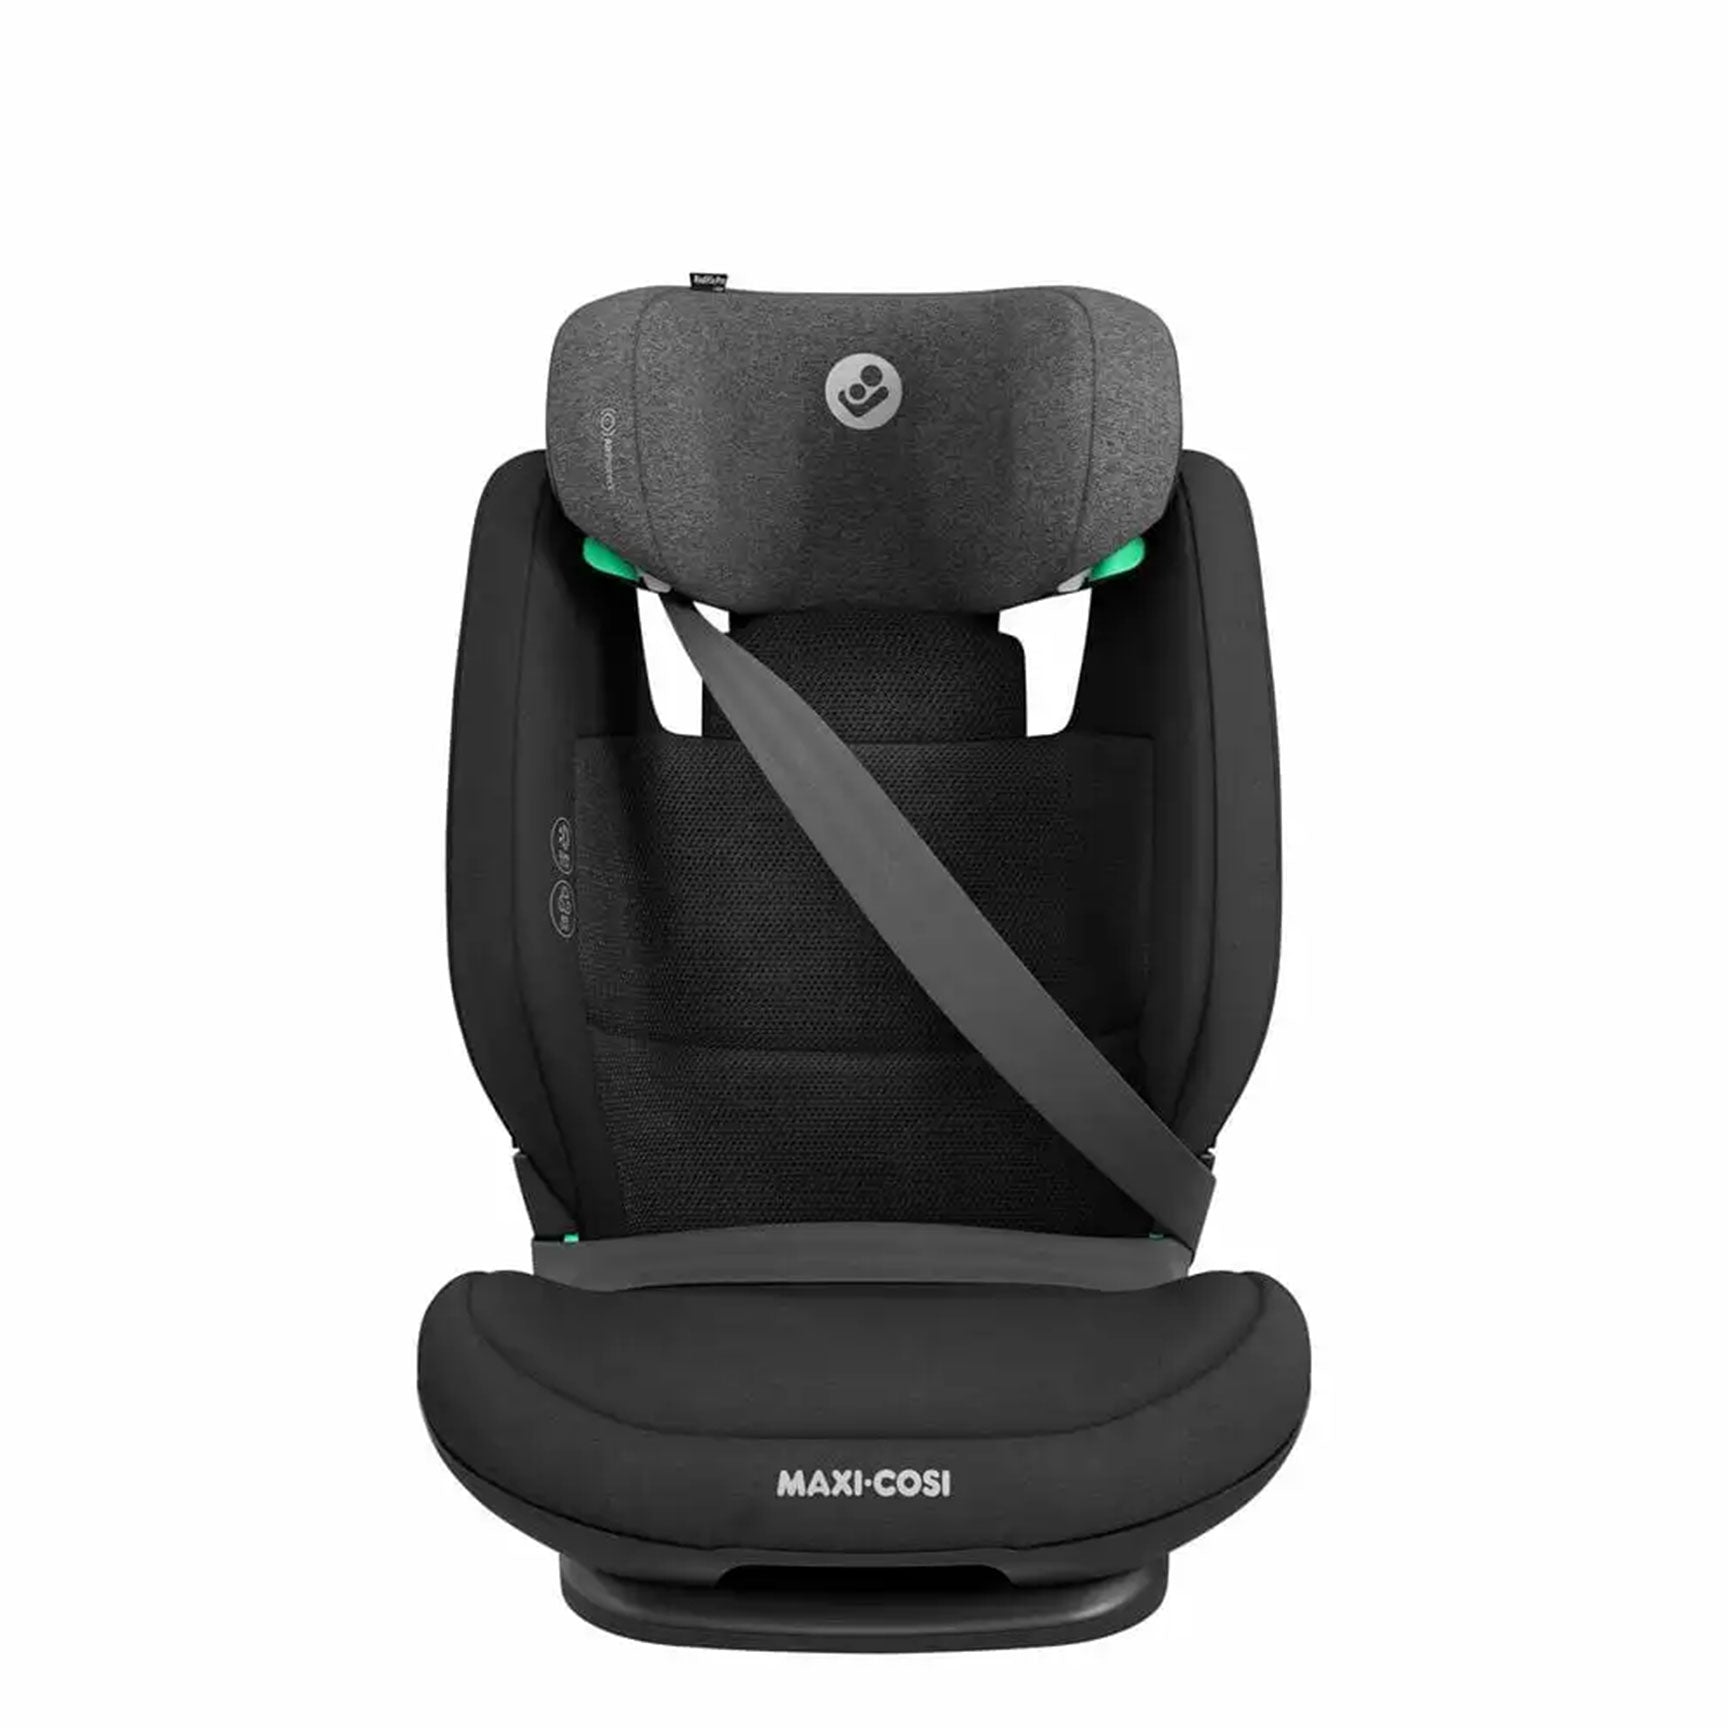 Maxi-Cosi Rodifix Pro i-size Car Seat in Authentic Black i-Size Car Seats 8800671110 8712930177685